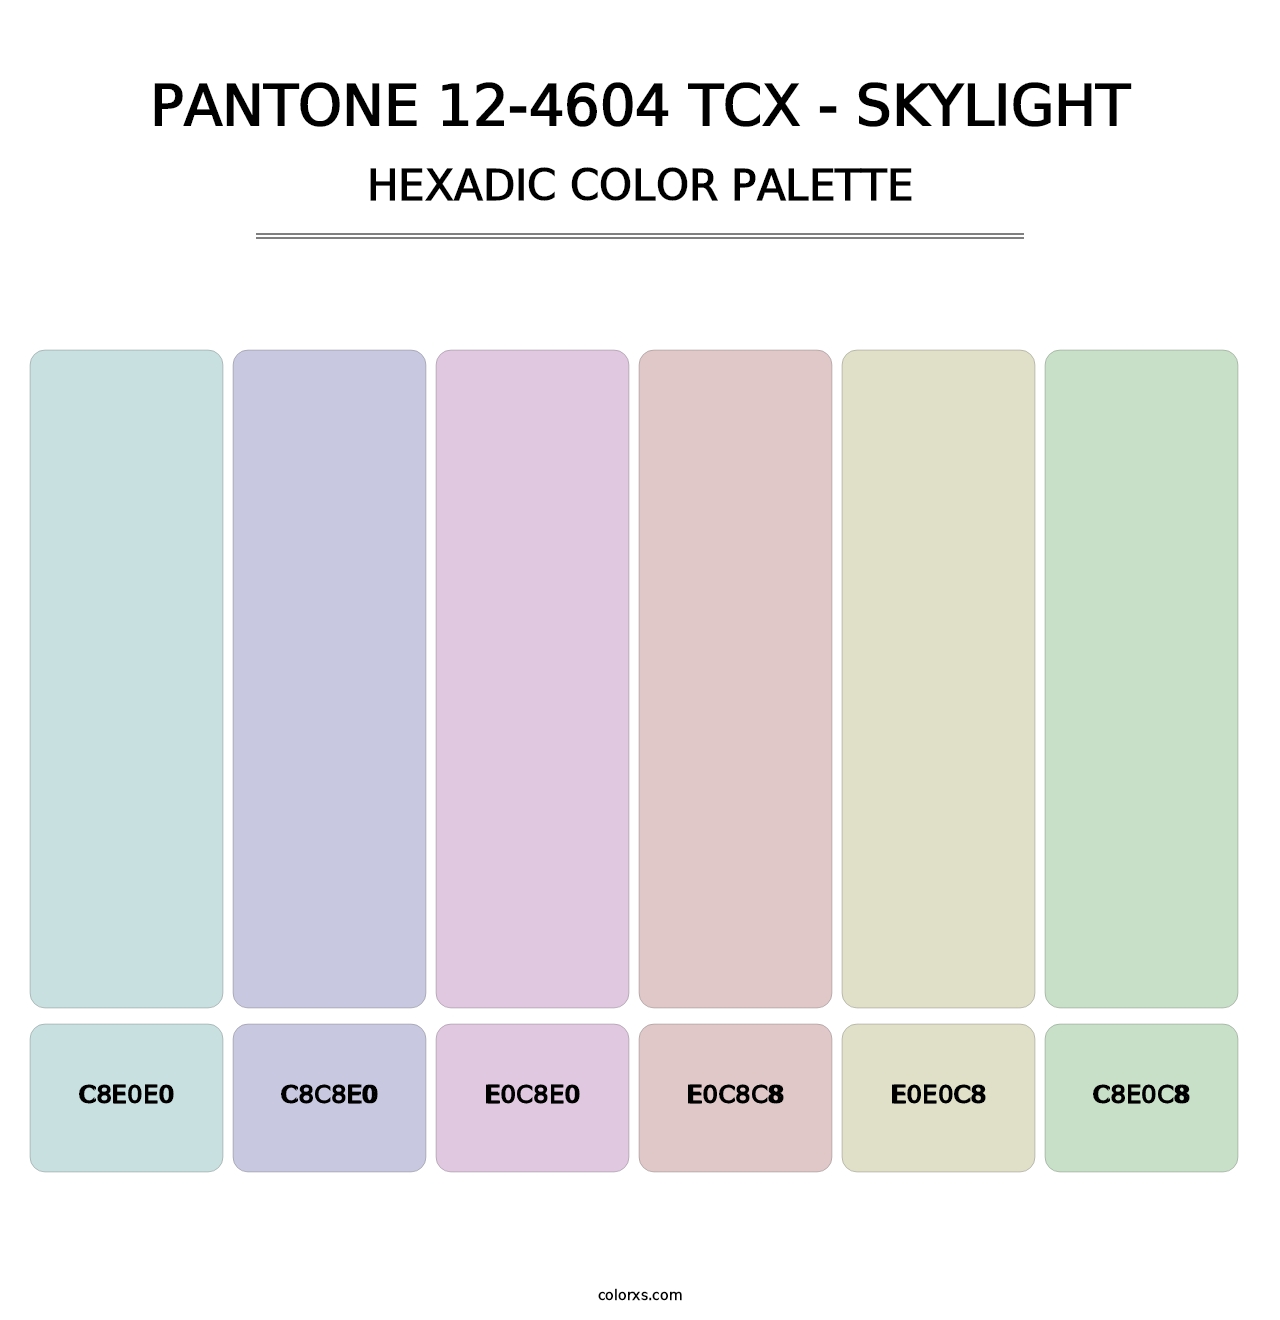 PANTONE 12-4604 TCX - Skylight - Hexadic Color Palette